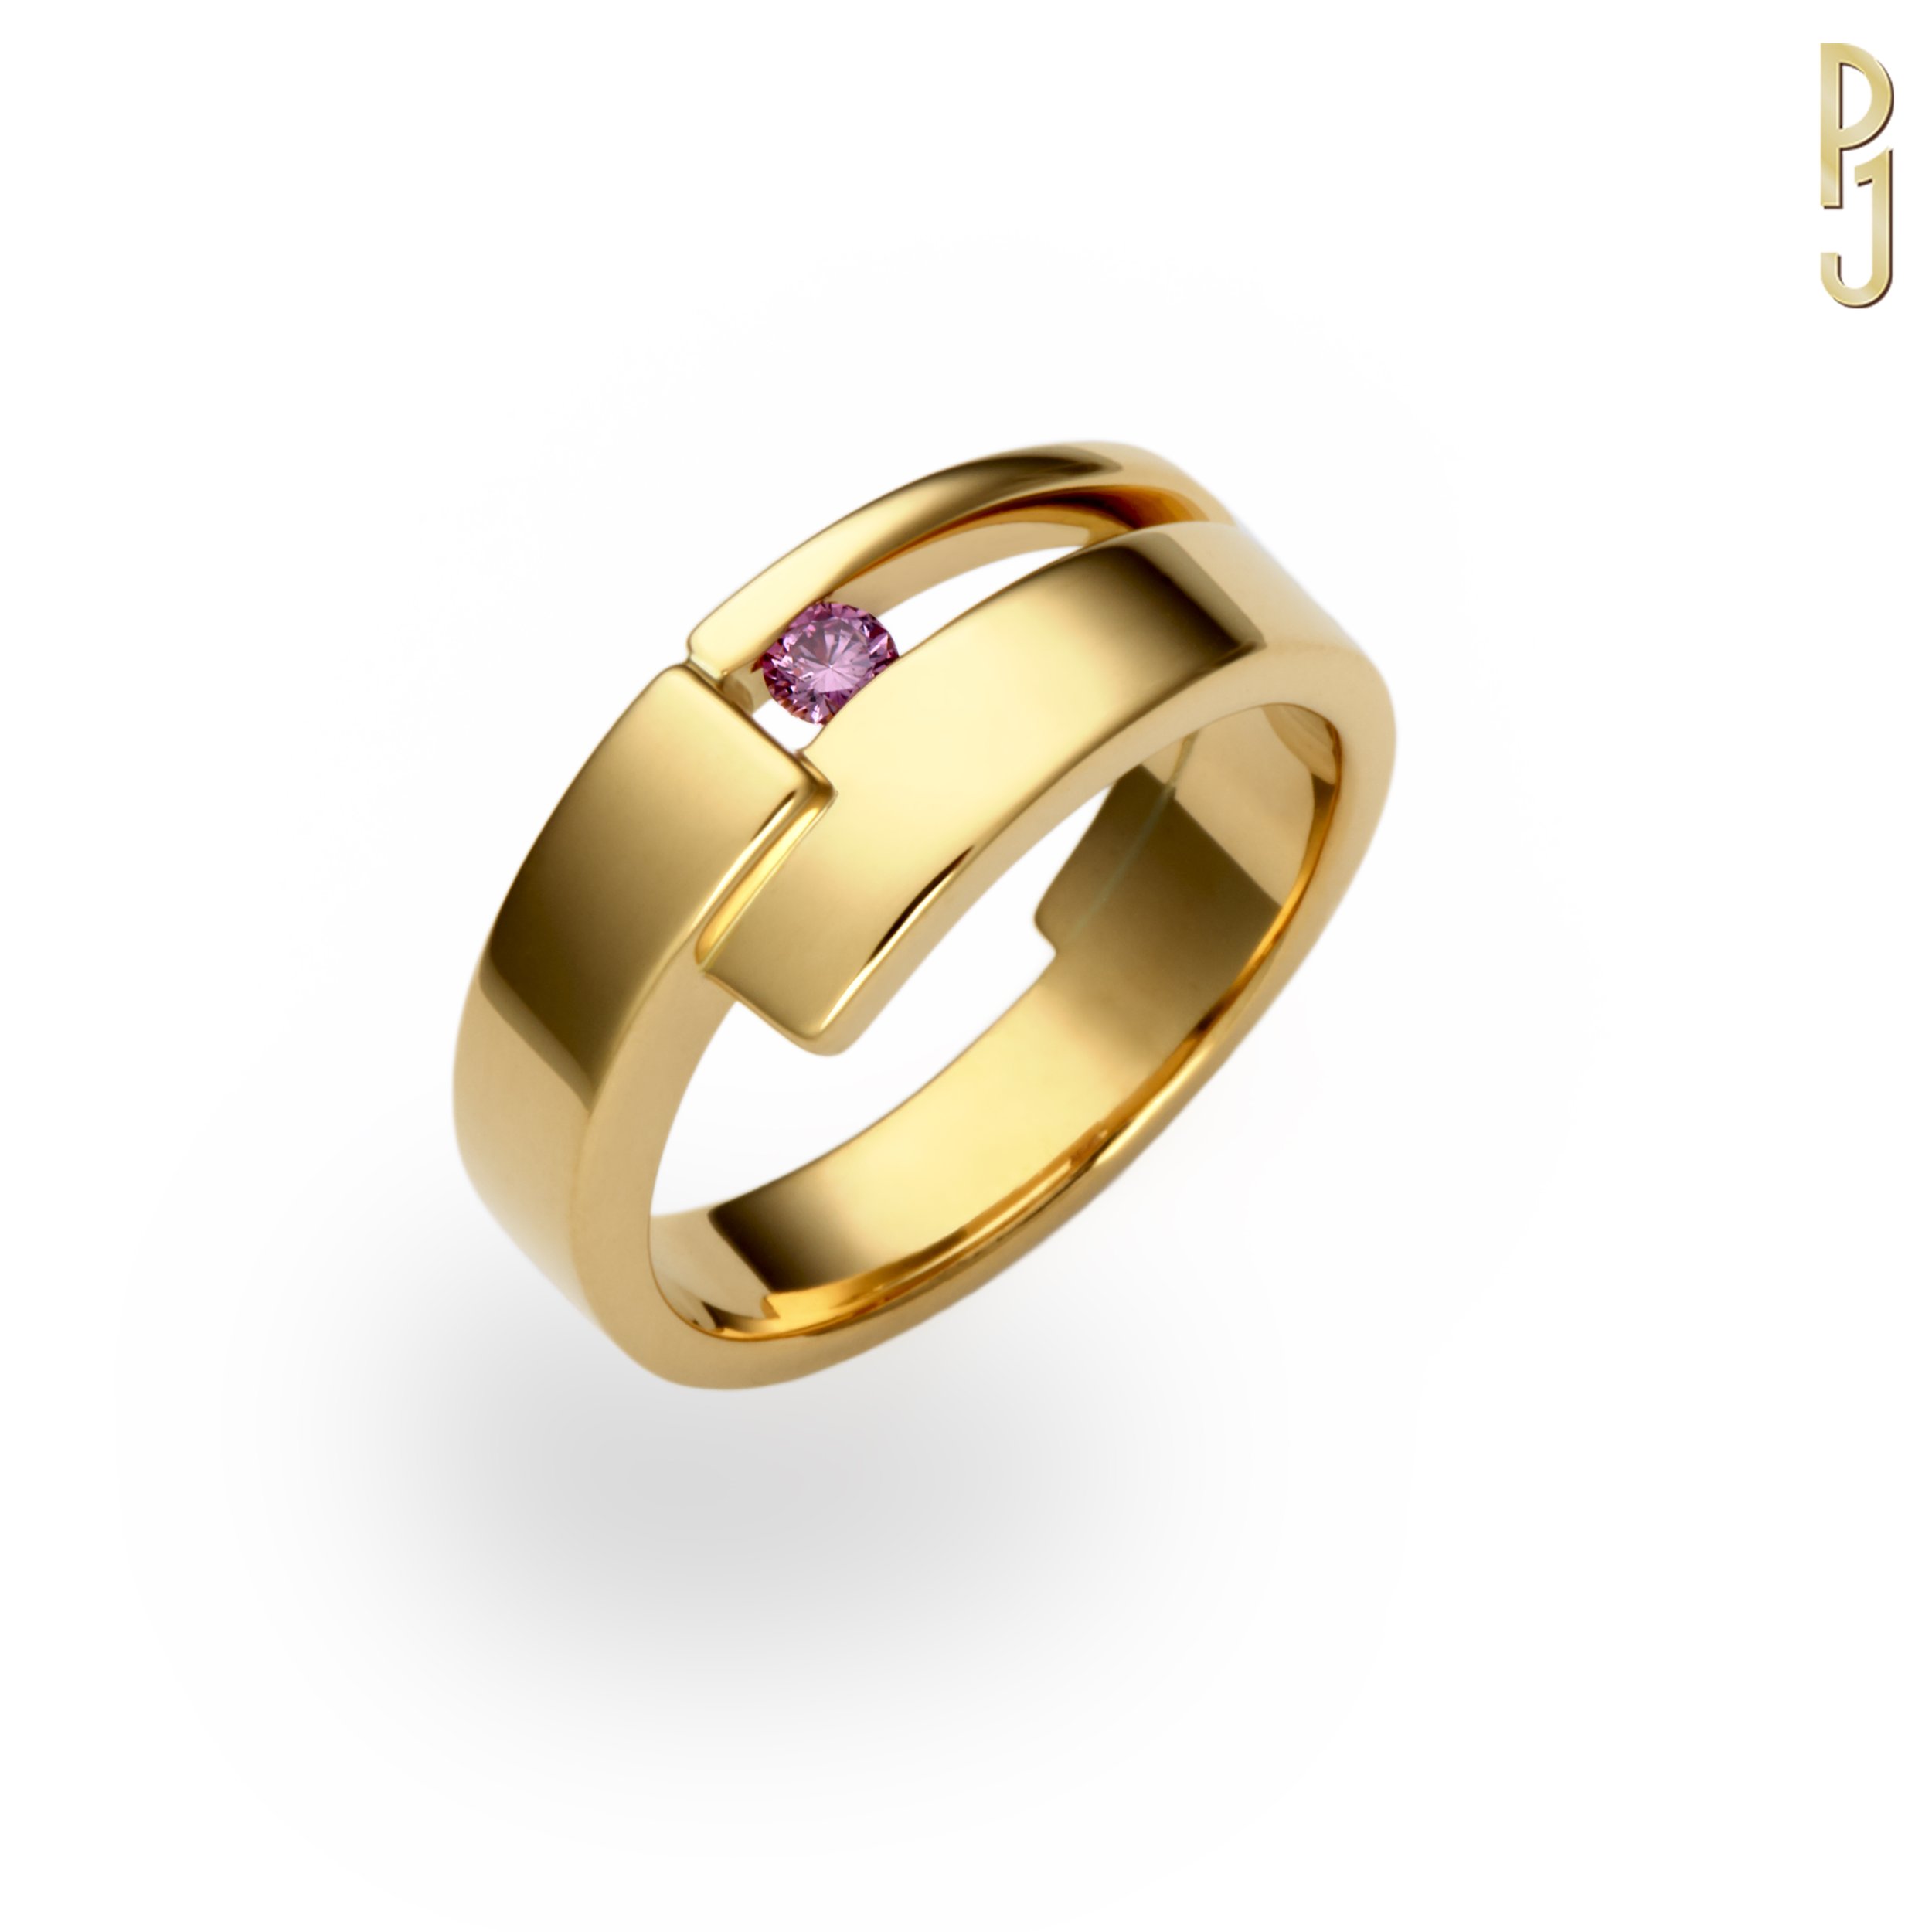 Custom Designed Dress Ring Certified Argyle Pink Diamond Yellow Gold Philip's Jewellery Mackay.jpg